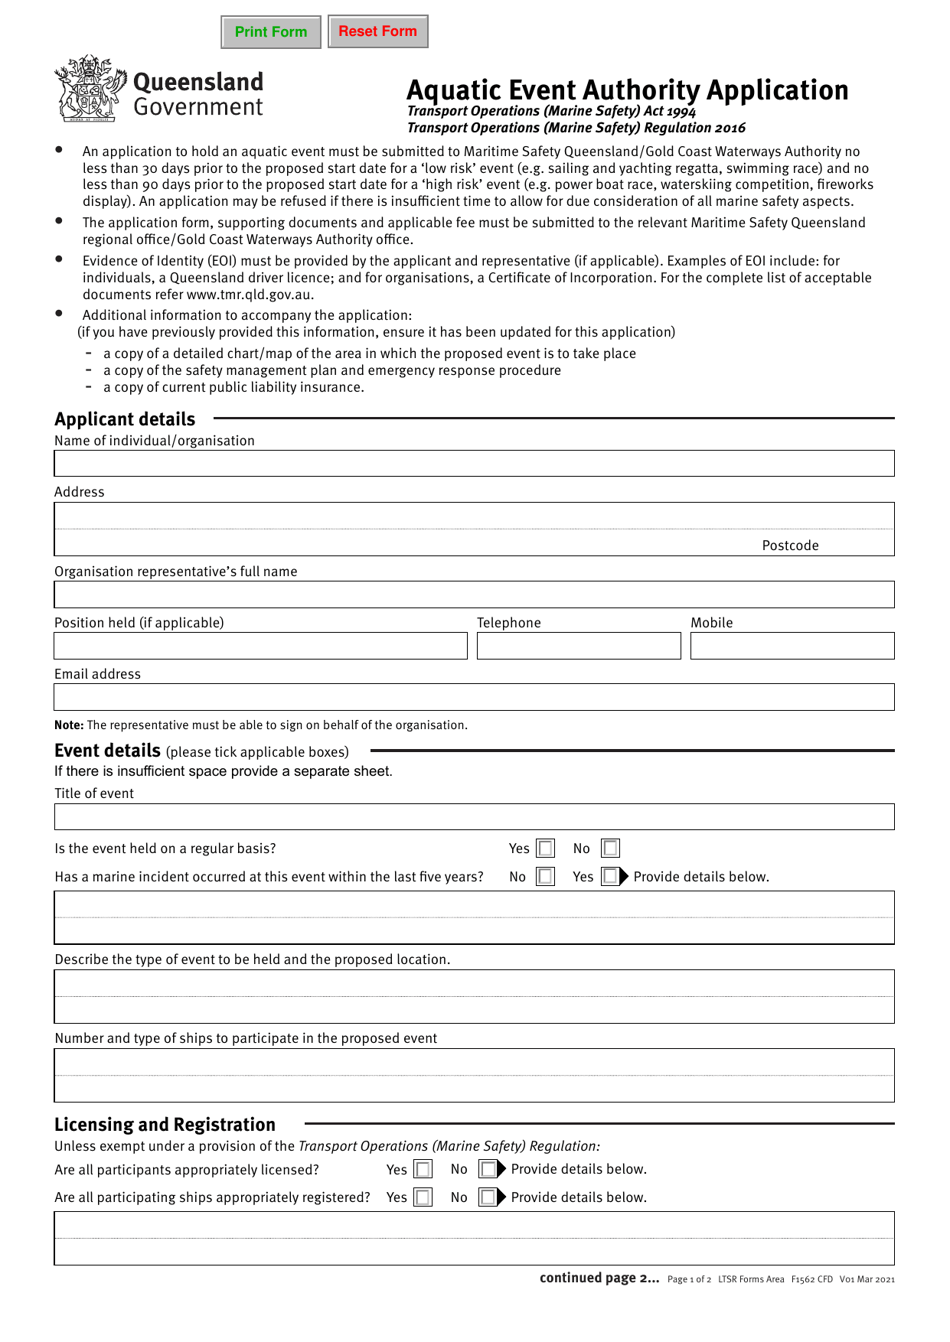 Form F5162 Aquatic Event Authority Application - Queensland, Australia, Page 1